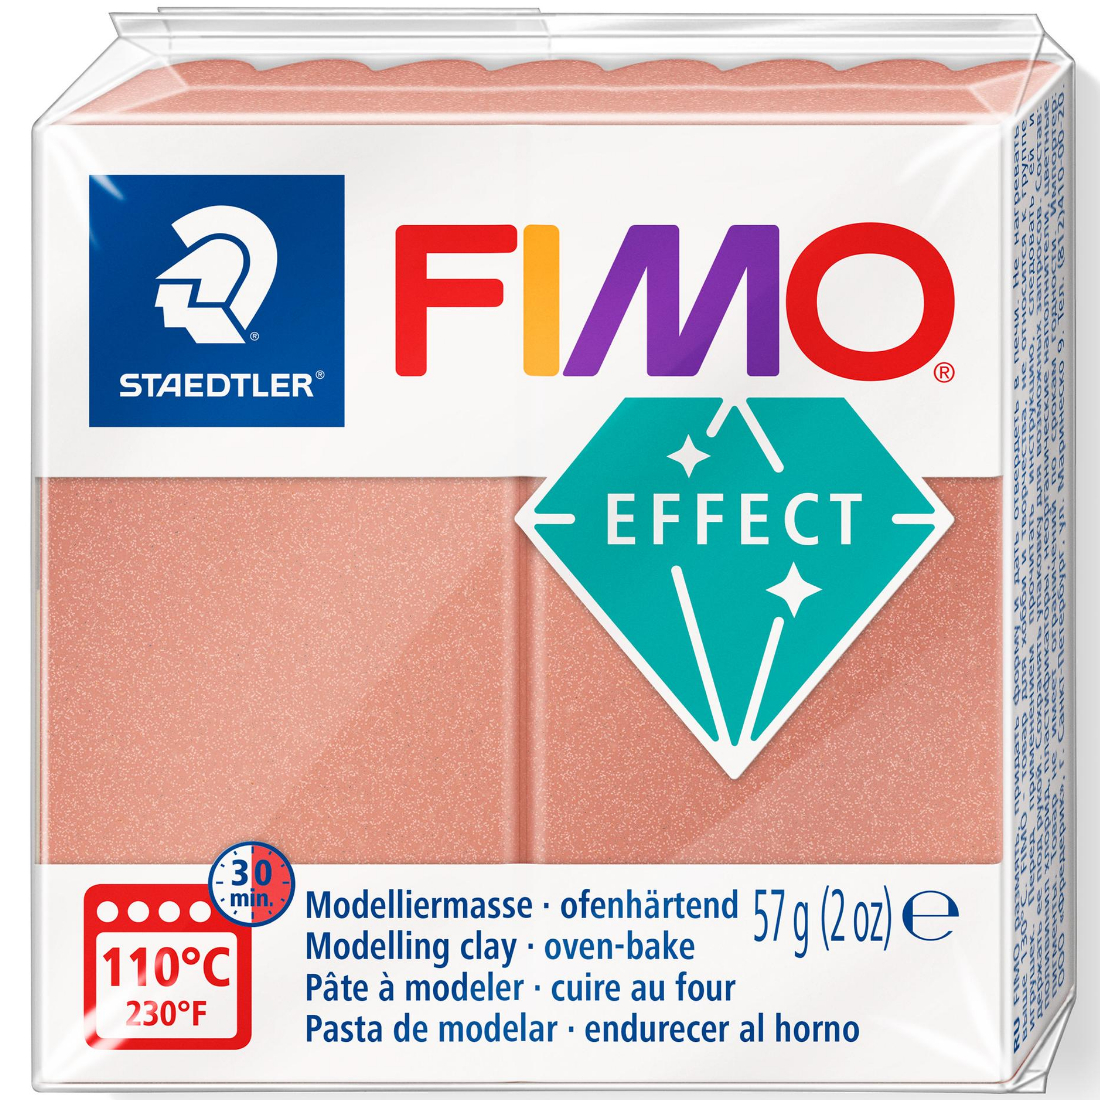 Pasta de Modelar FIMO Effect Pearl staedtler